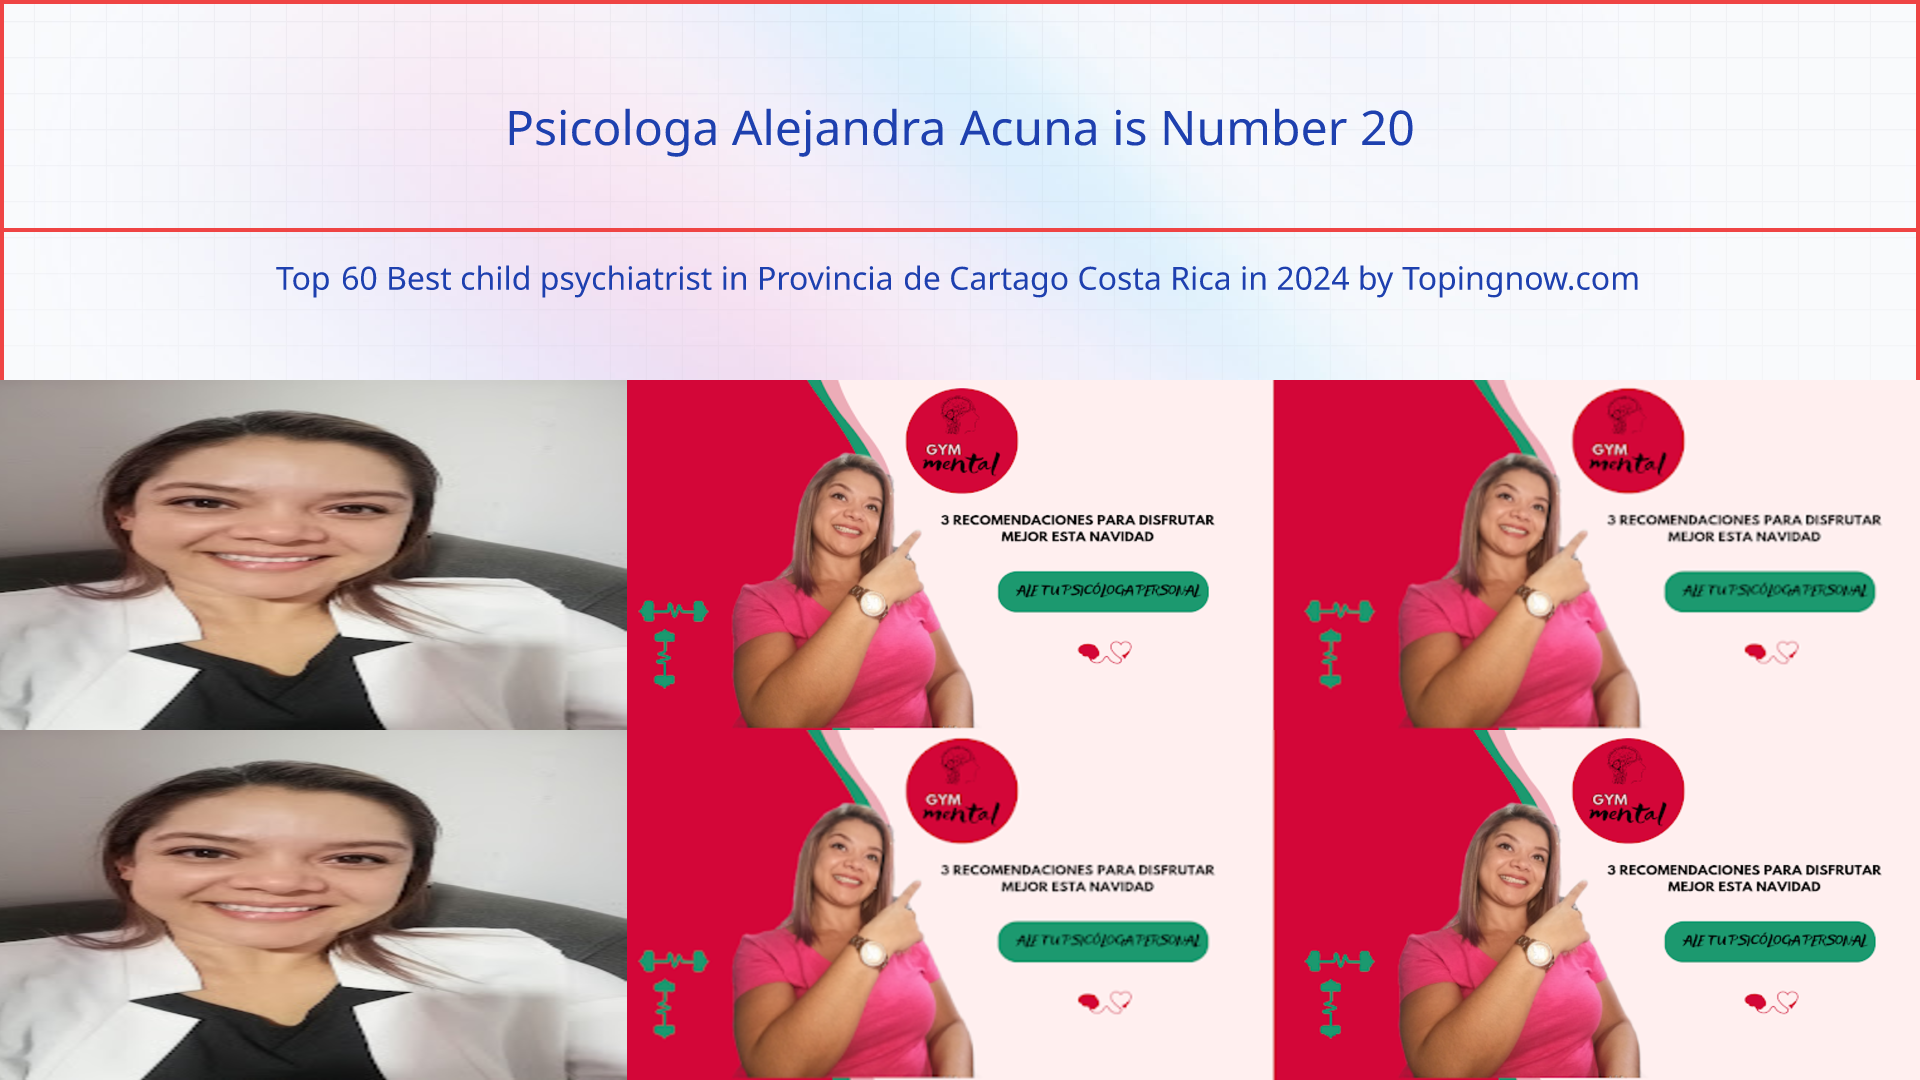 Psicologa Alejandra Acuna: Top 60 Best child psychiatrist in Provincia de Cartago Costa Rica in 2024